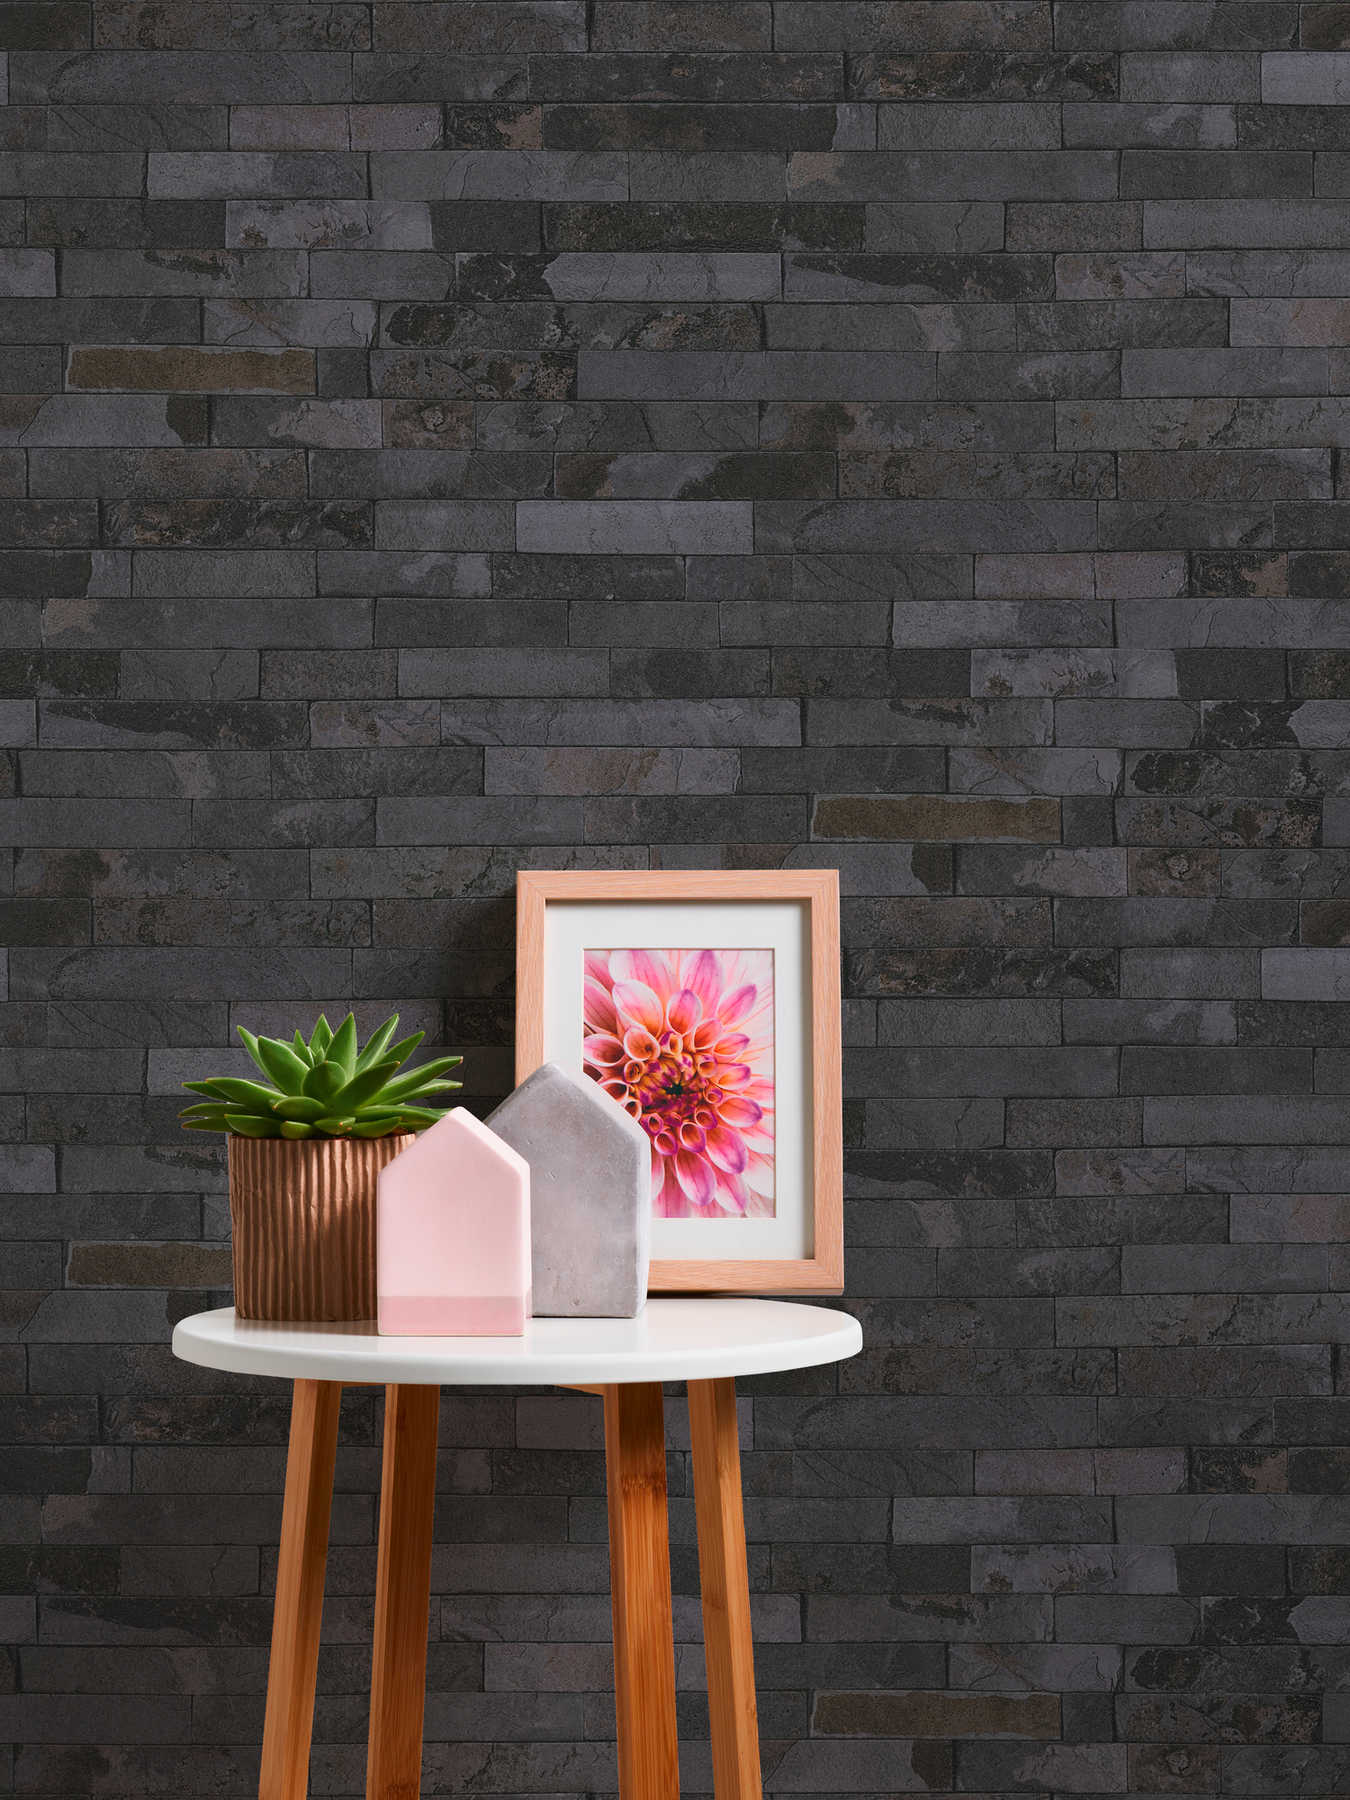             Stone wallpaper black wall & natural grain
        